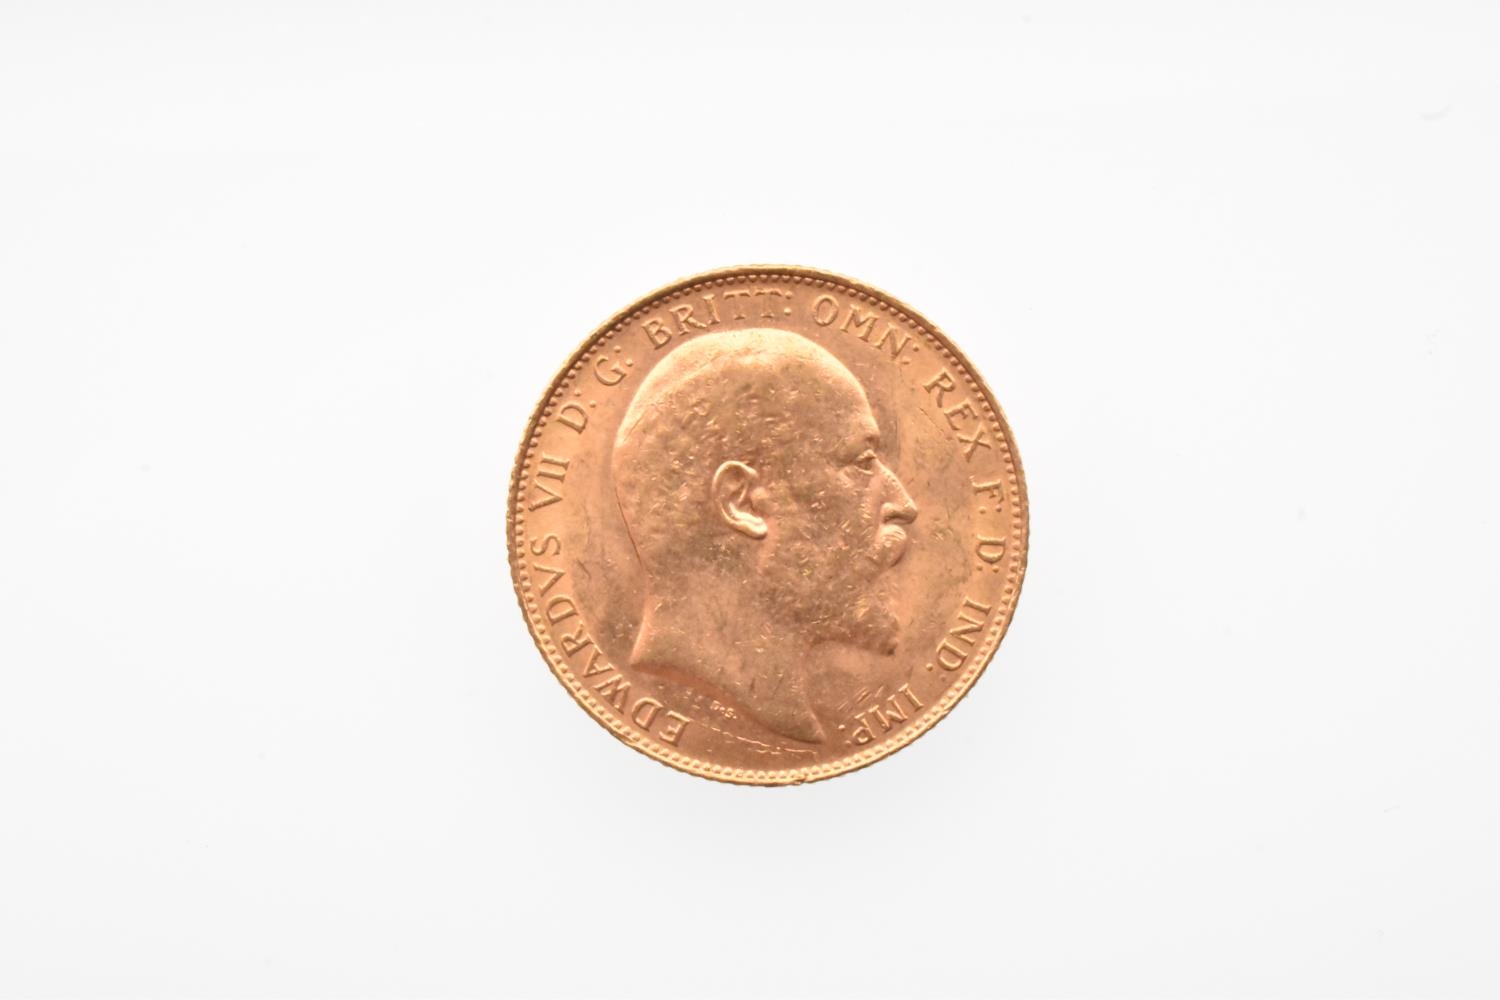 United Kingdom - Edward VII (1901-1910), Gold Sovereign, dated 1907, London mint, - Image 2 of 2